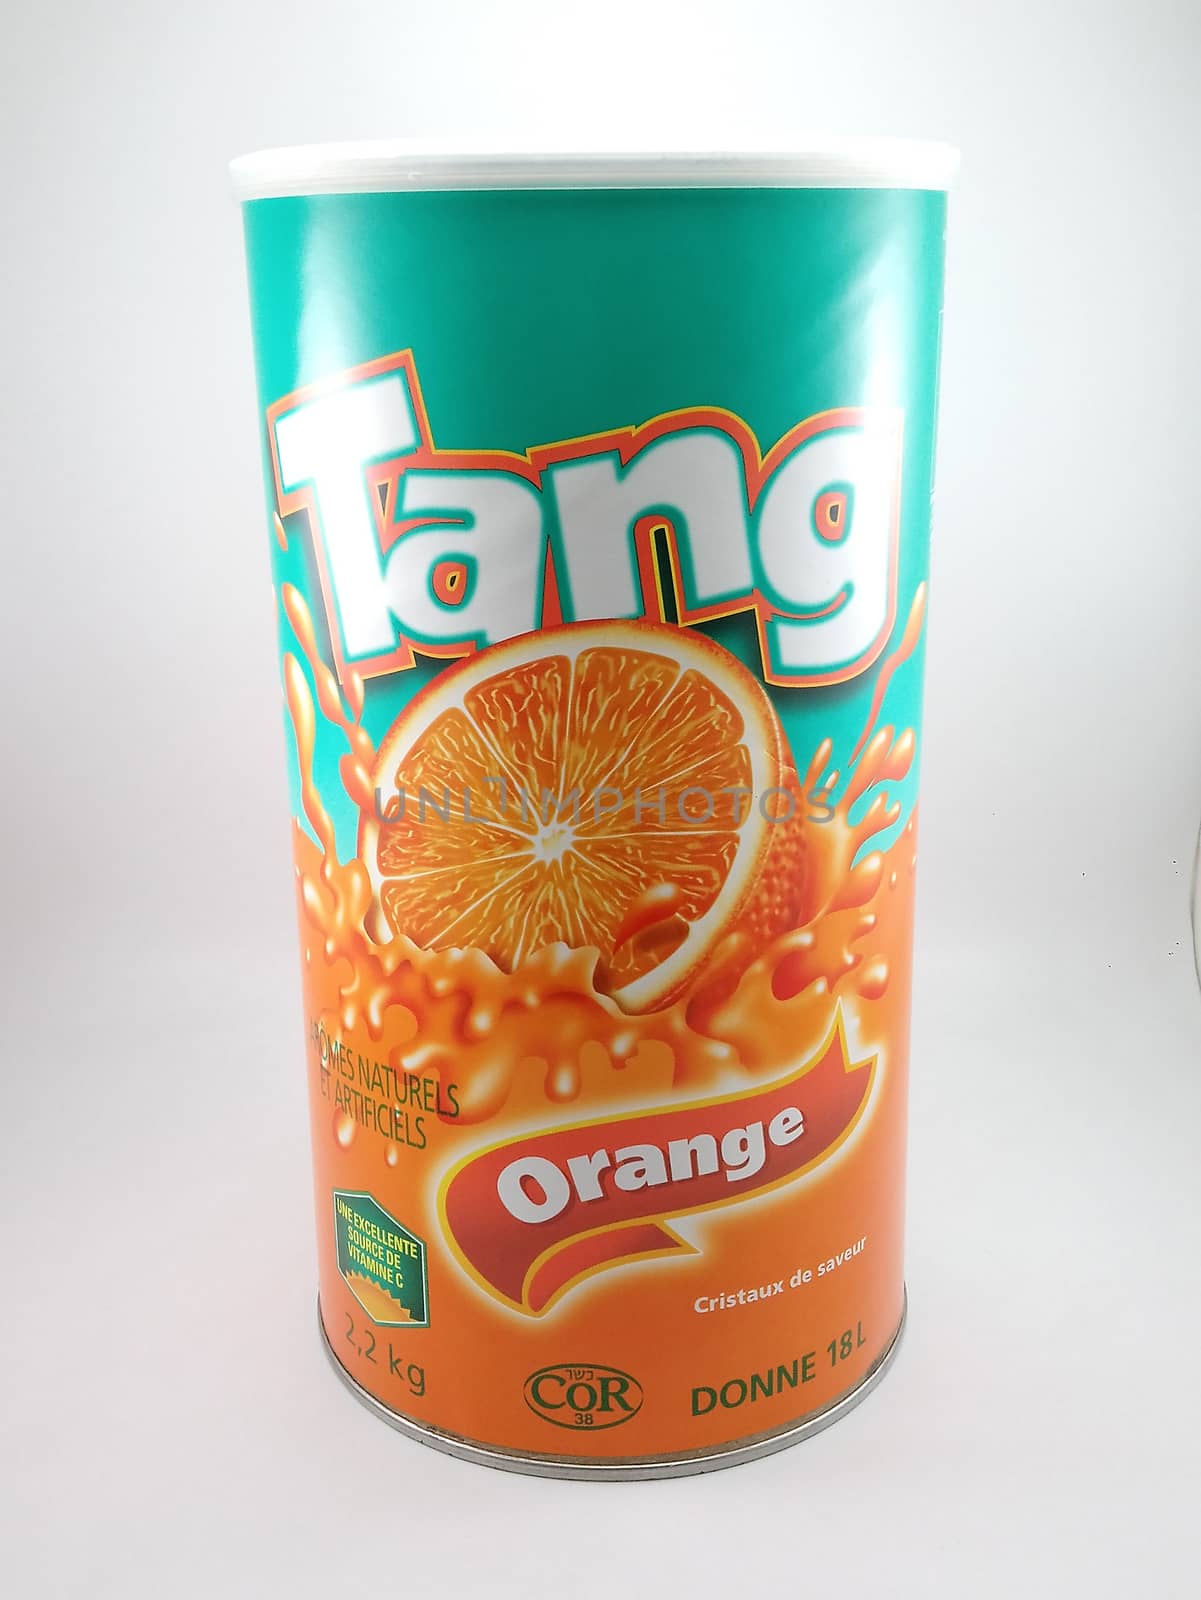 Tang orange juice powder in Manila, Philippines by imwaltersy